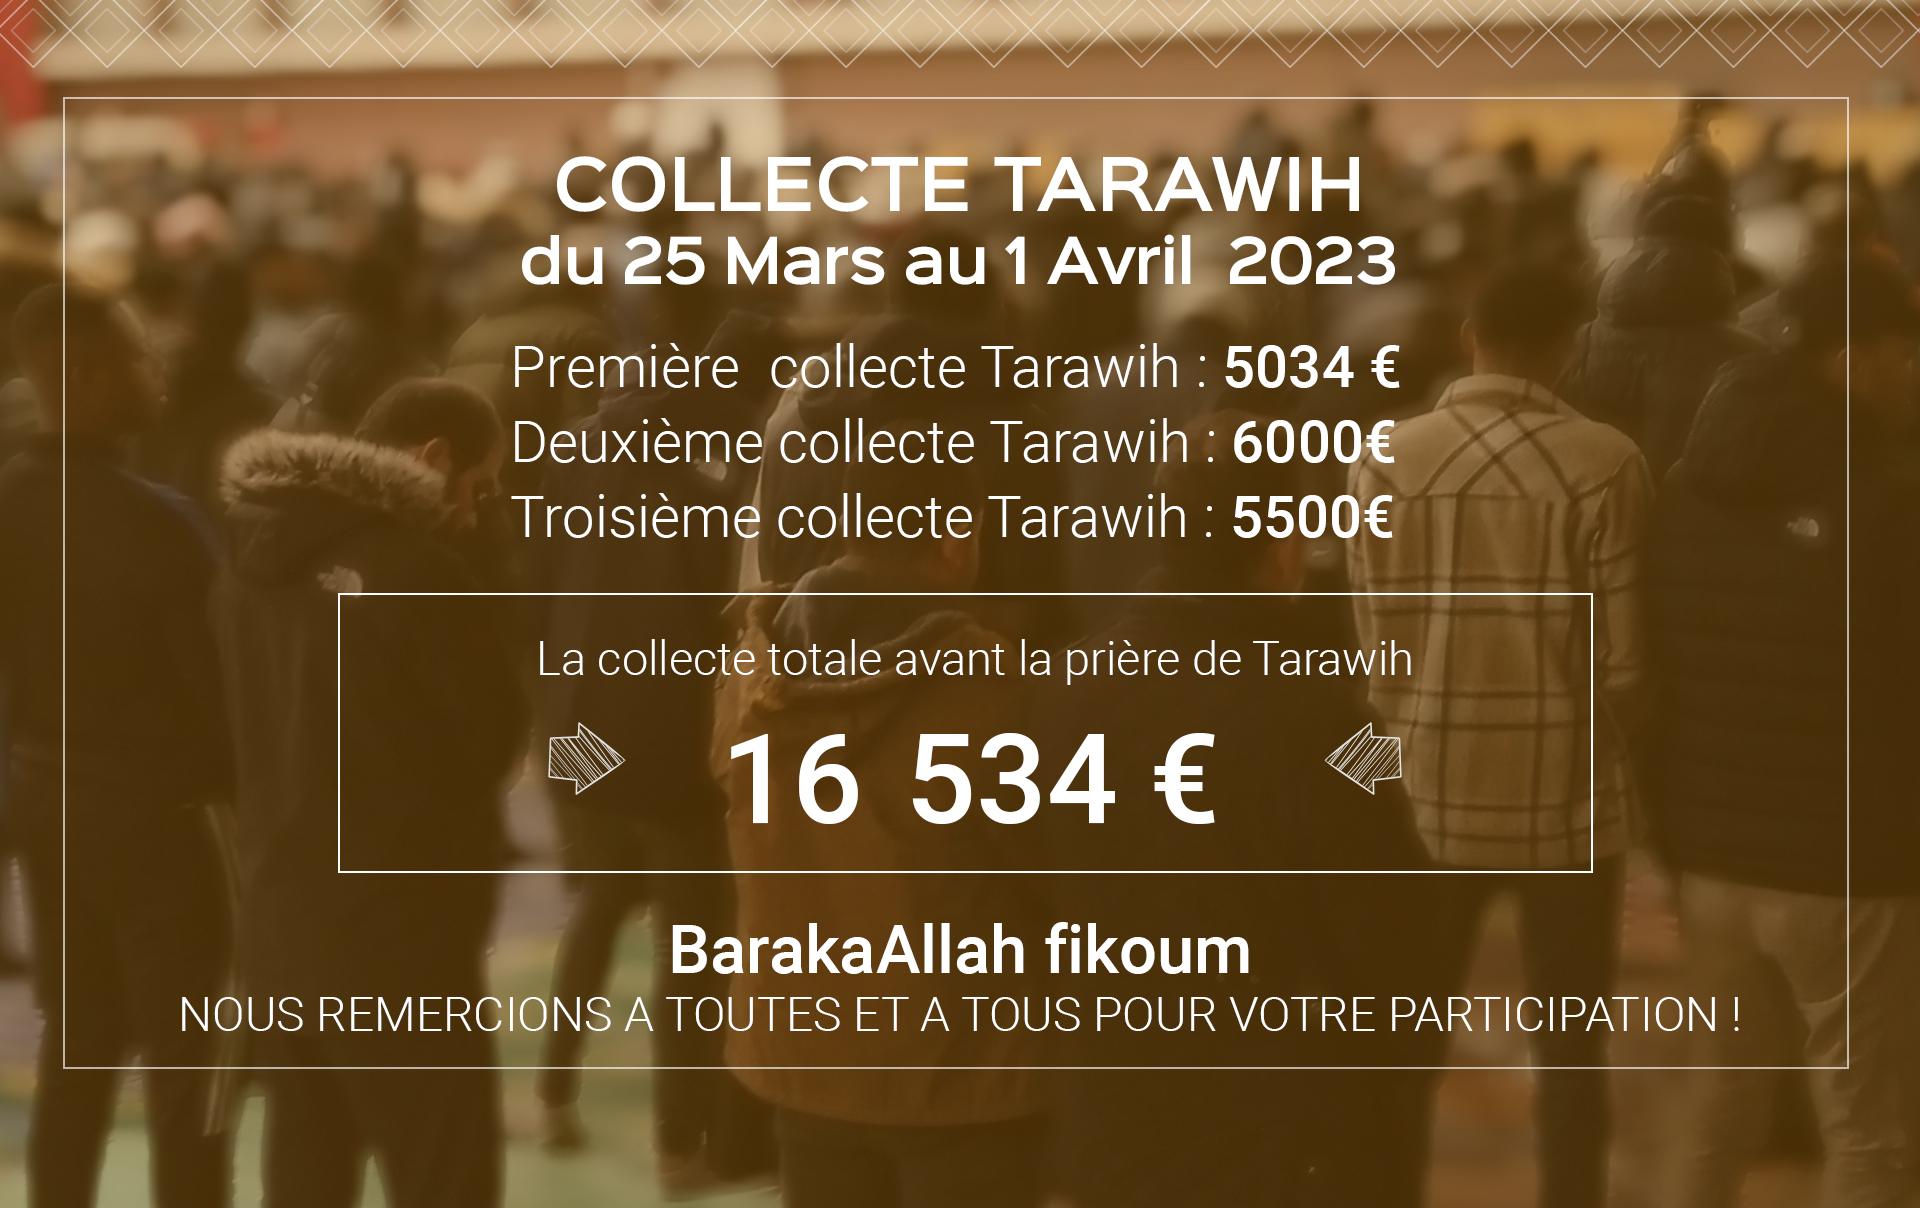 collecte tarawih Mosquee Pantin